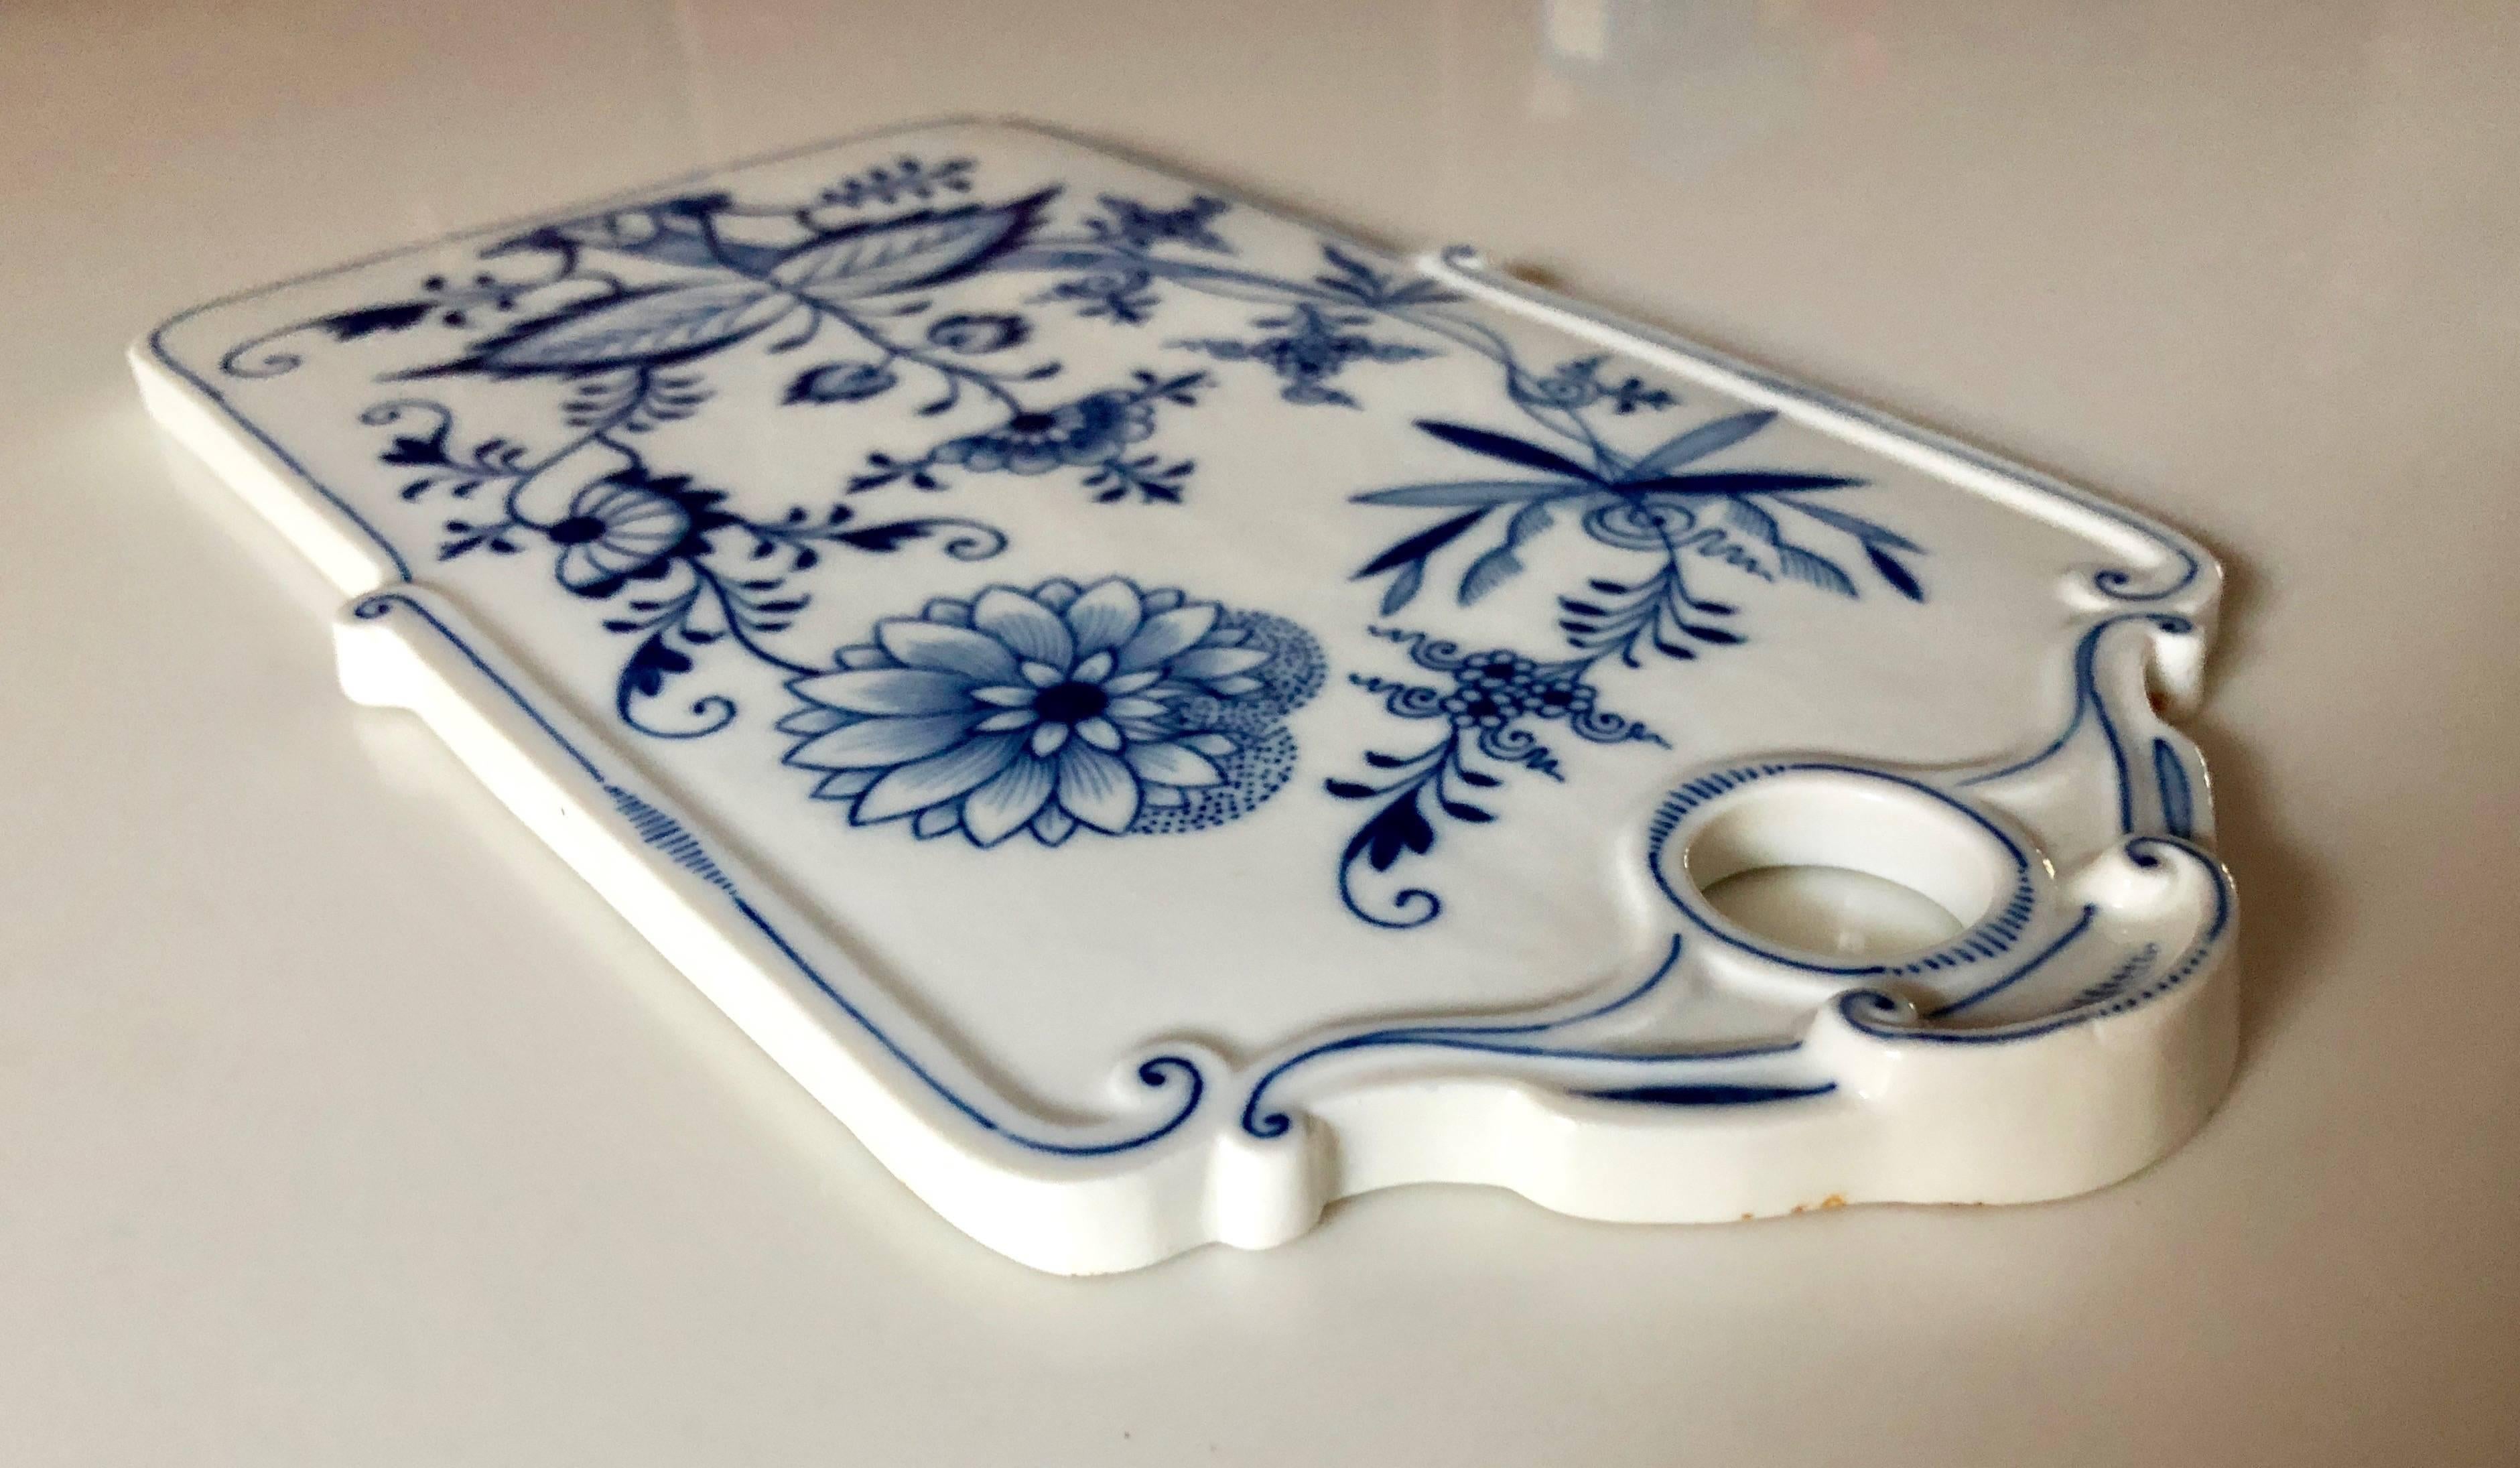 Late 19th century Meissen Porcelain blue onion cutting board.